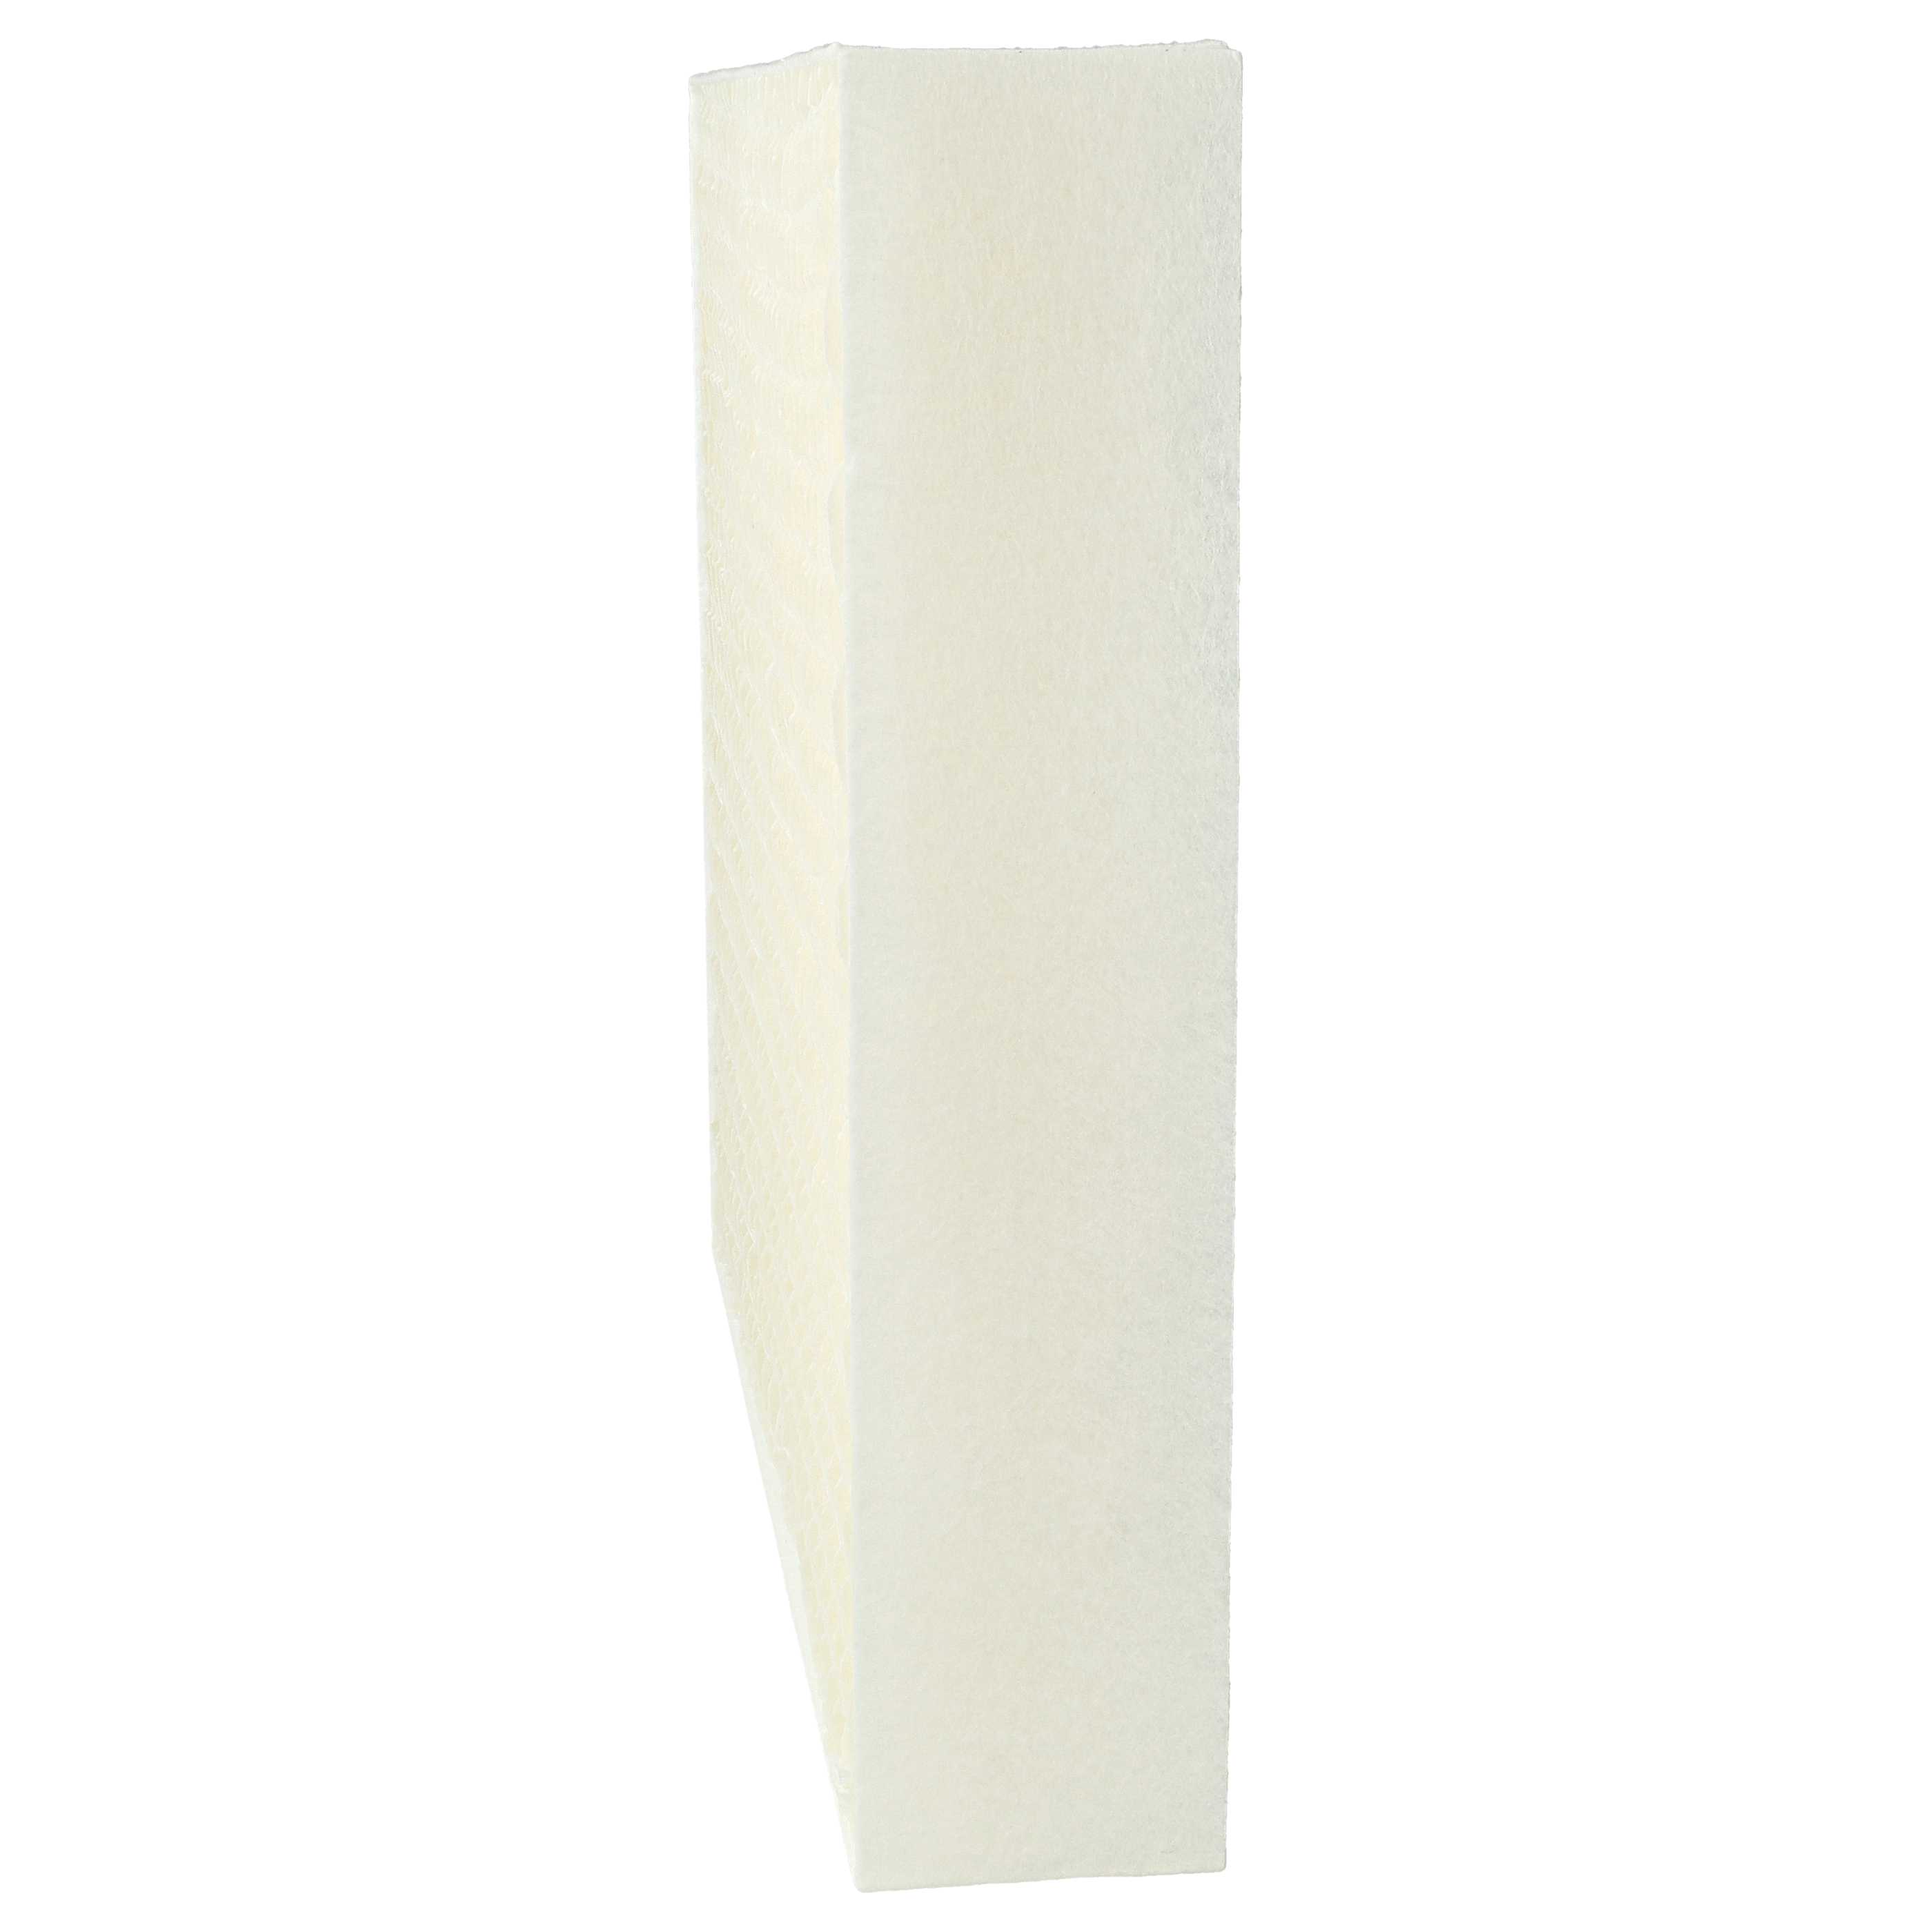 6x Filtro reemplaza Stadler Form 10004, 14643/10 para humidificador - papel